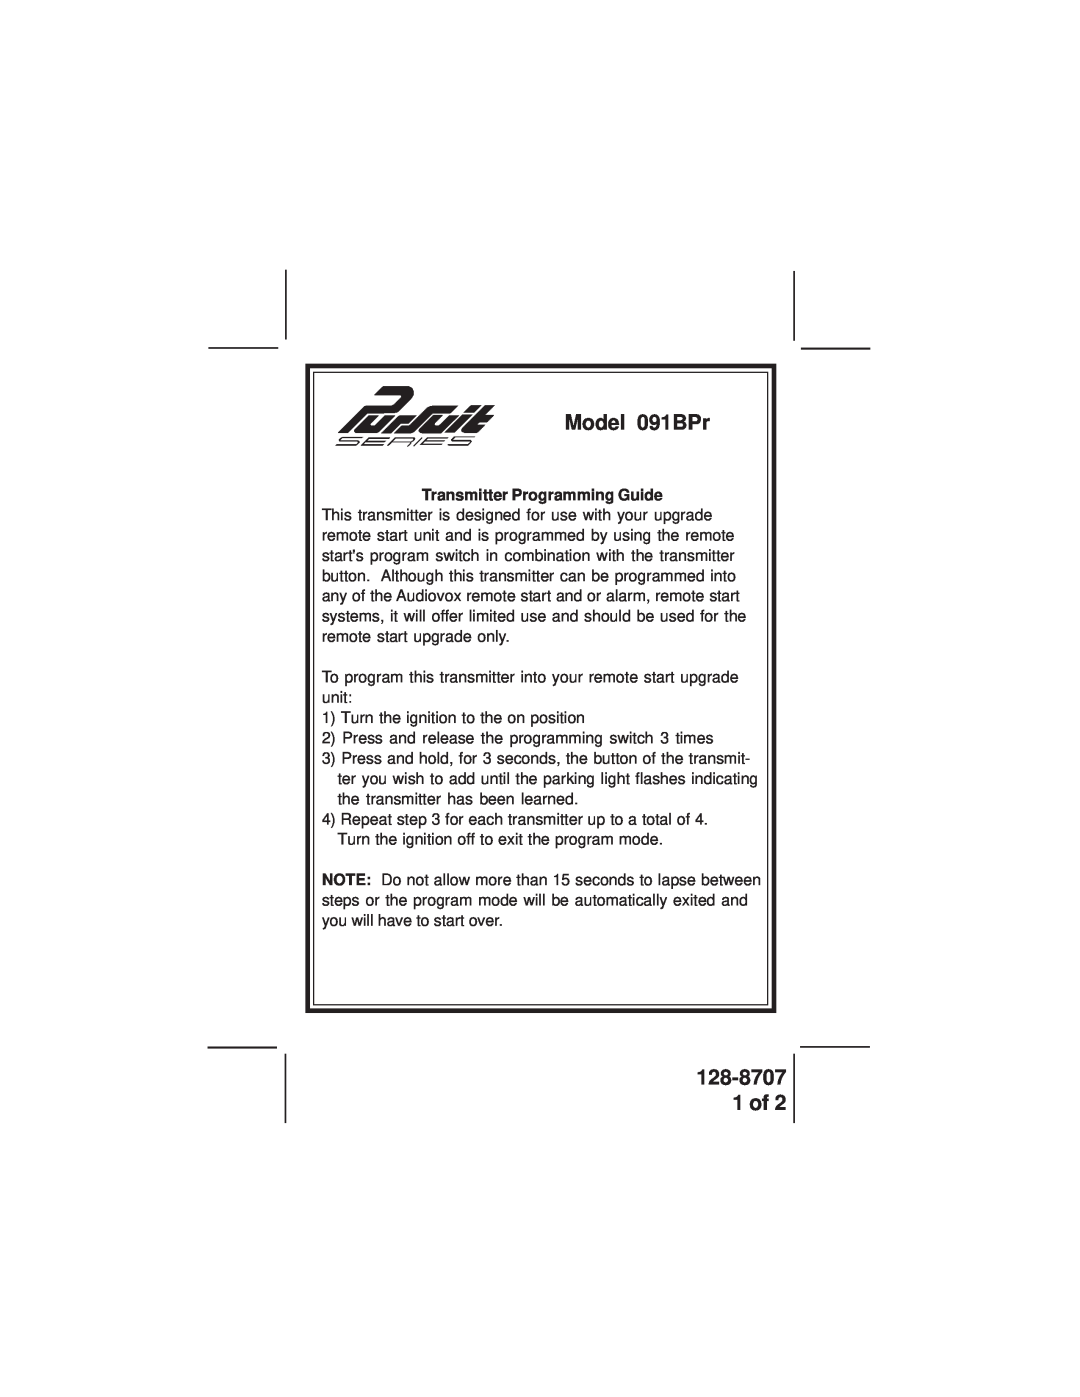 Audiovox 5125 manual Model 091BPr, 128-8707 1 of, Transmitter Programming Guide 